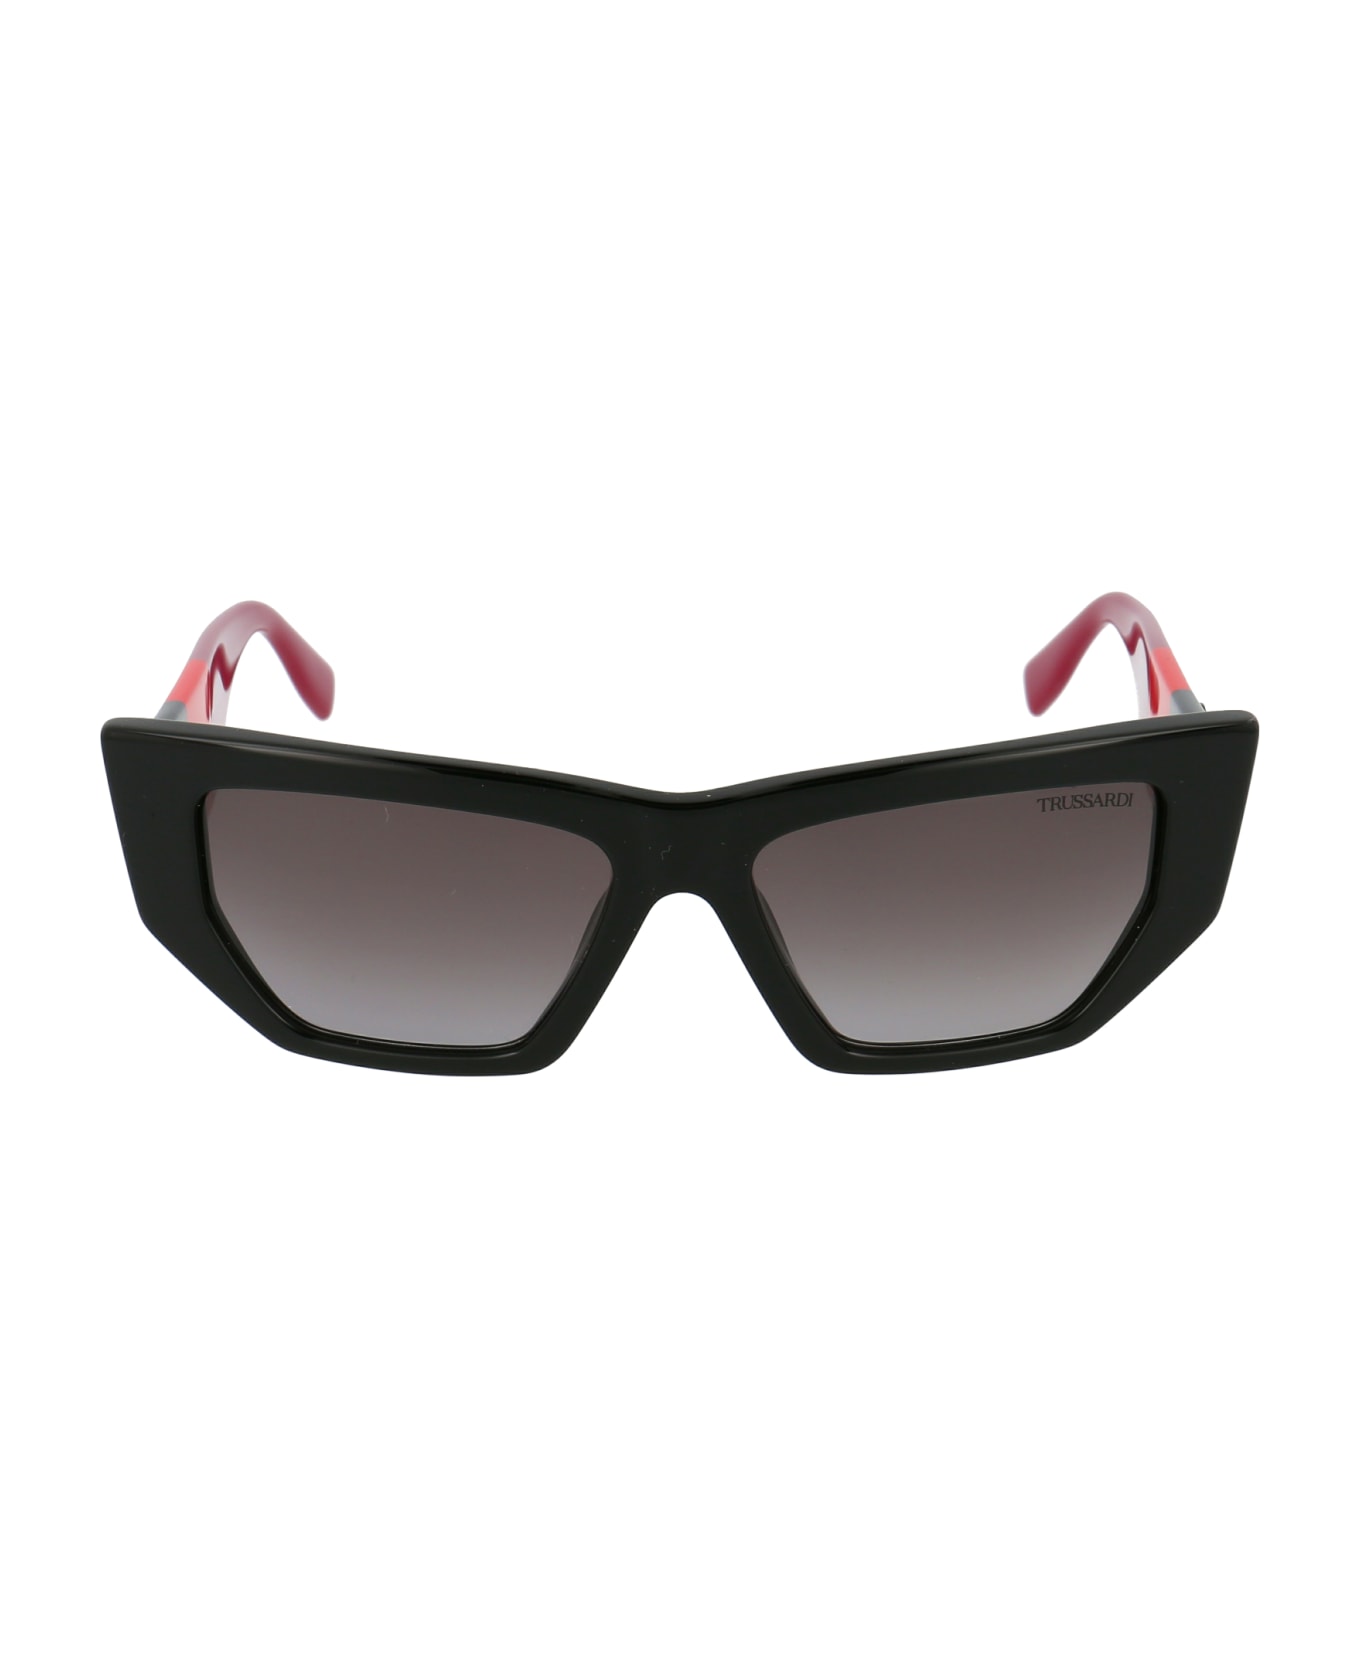 Trussardi Str377v Sunglasses - 0700 BLACK